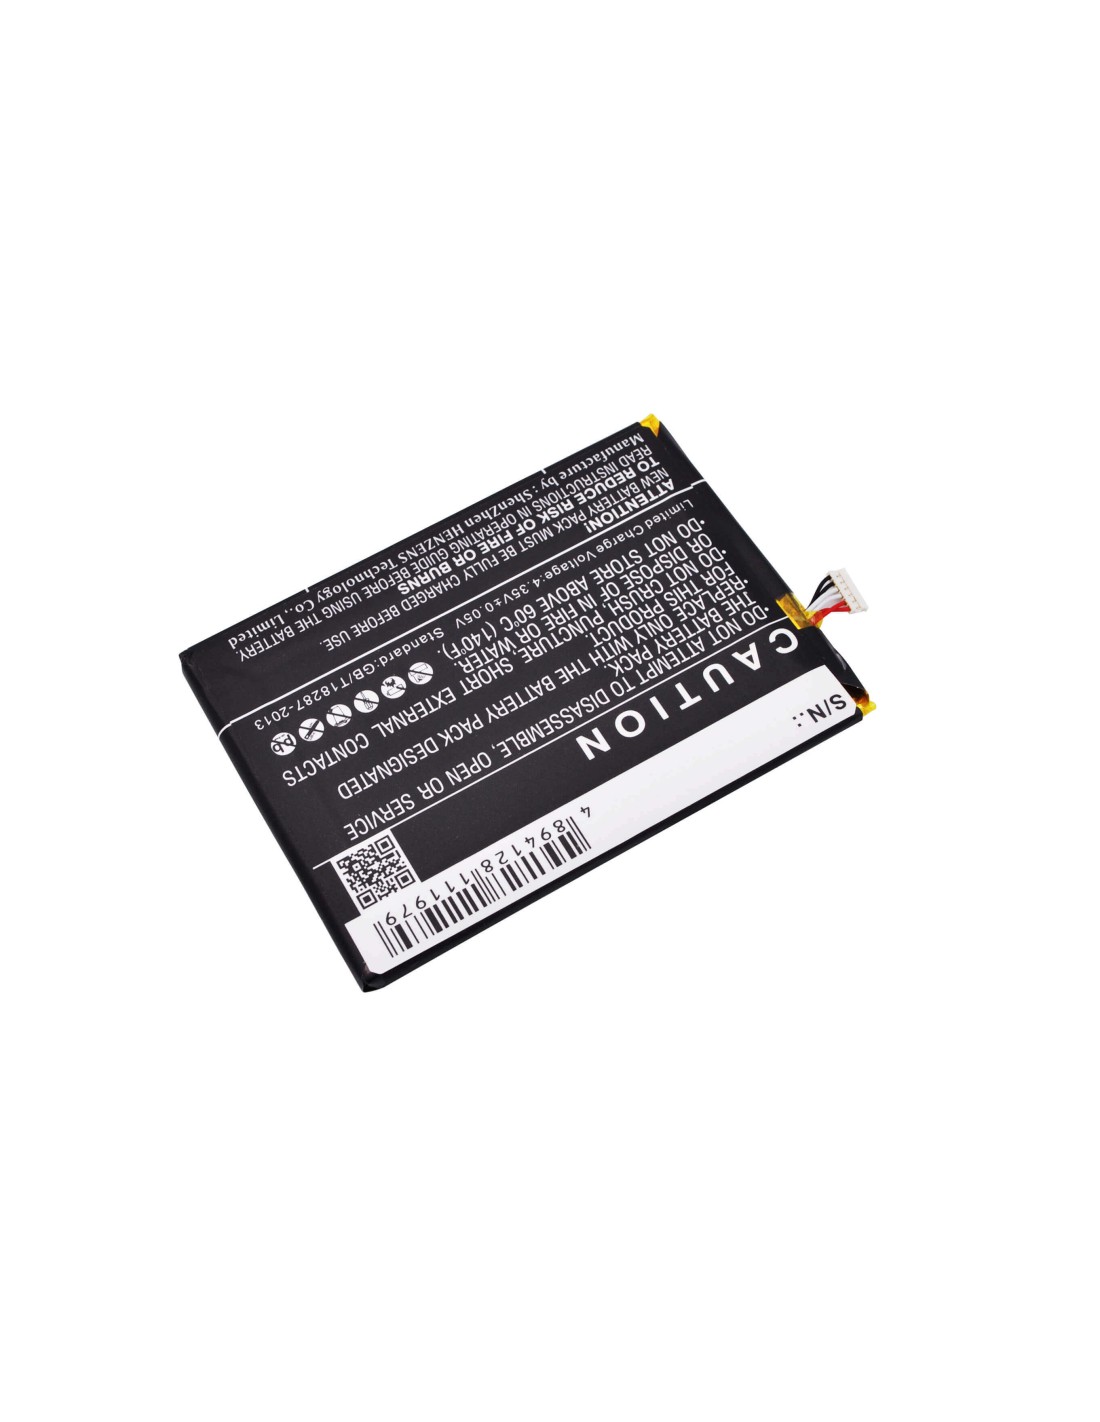 Battery for BLU Life Pro, L210a, L210i 3.8V, 2500mAh - 9.50Wh